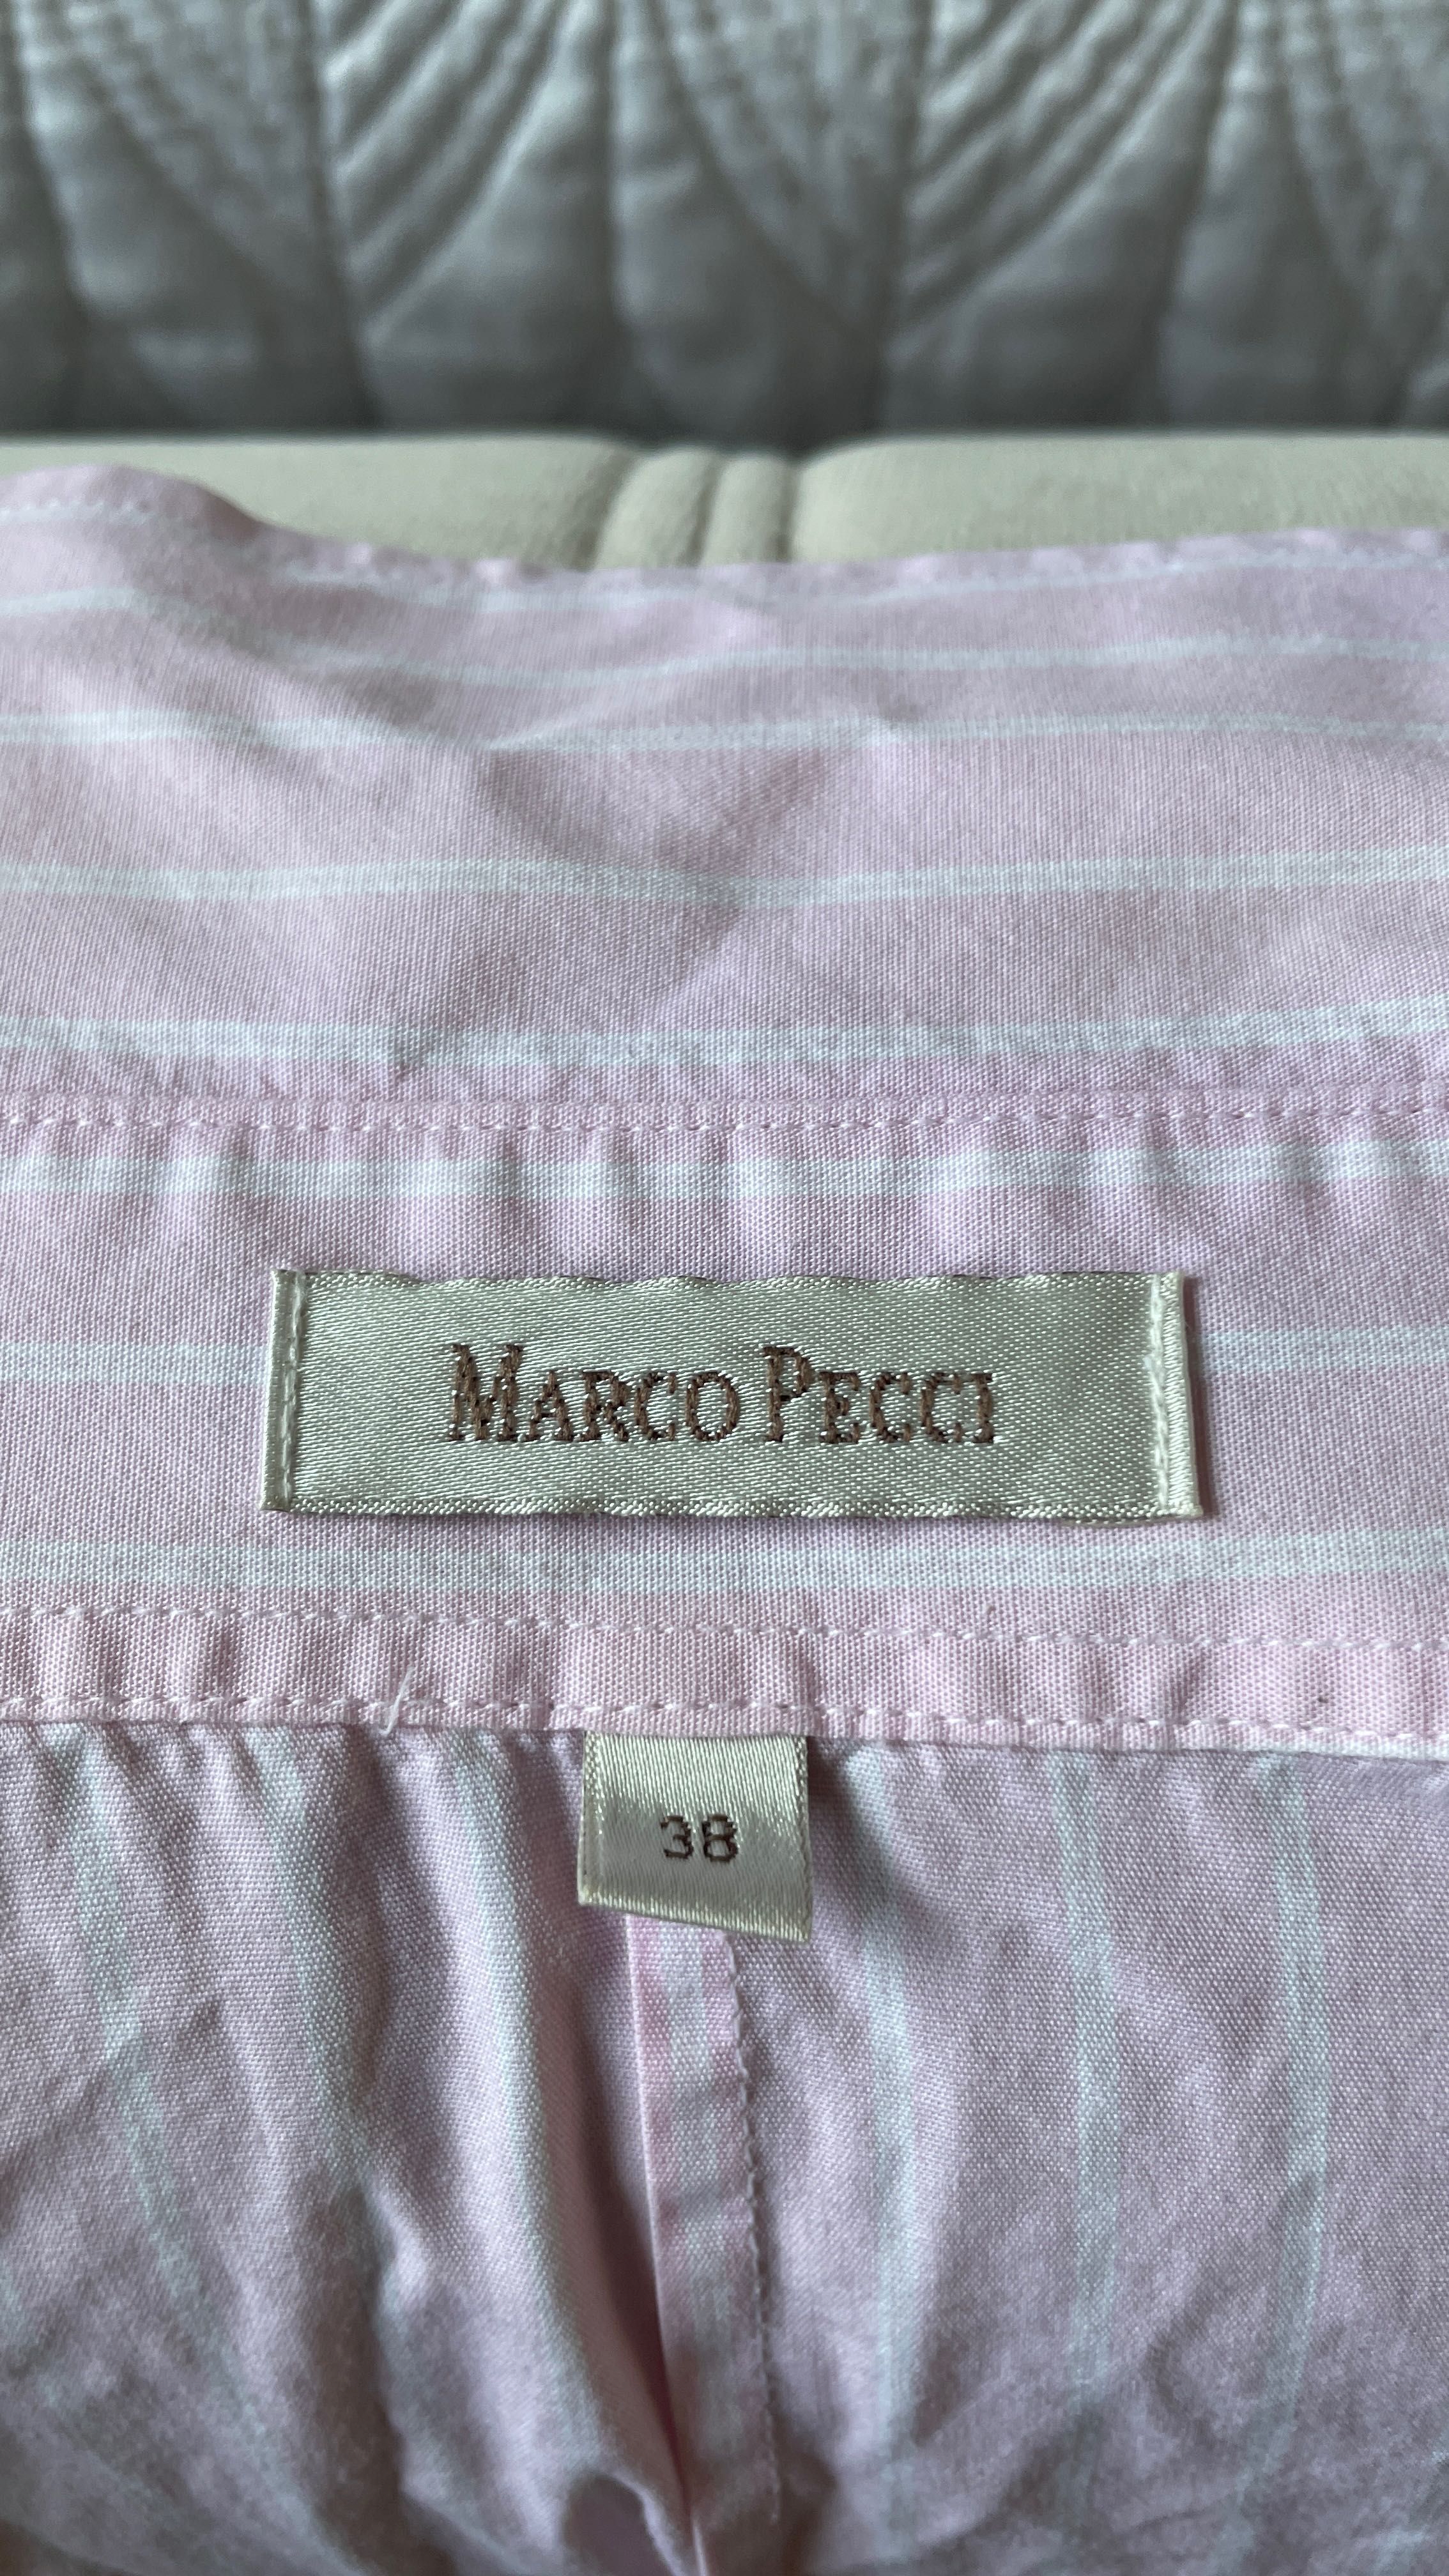 Camasa Marco Pecci dama roz, masura 38